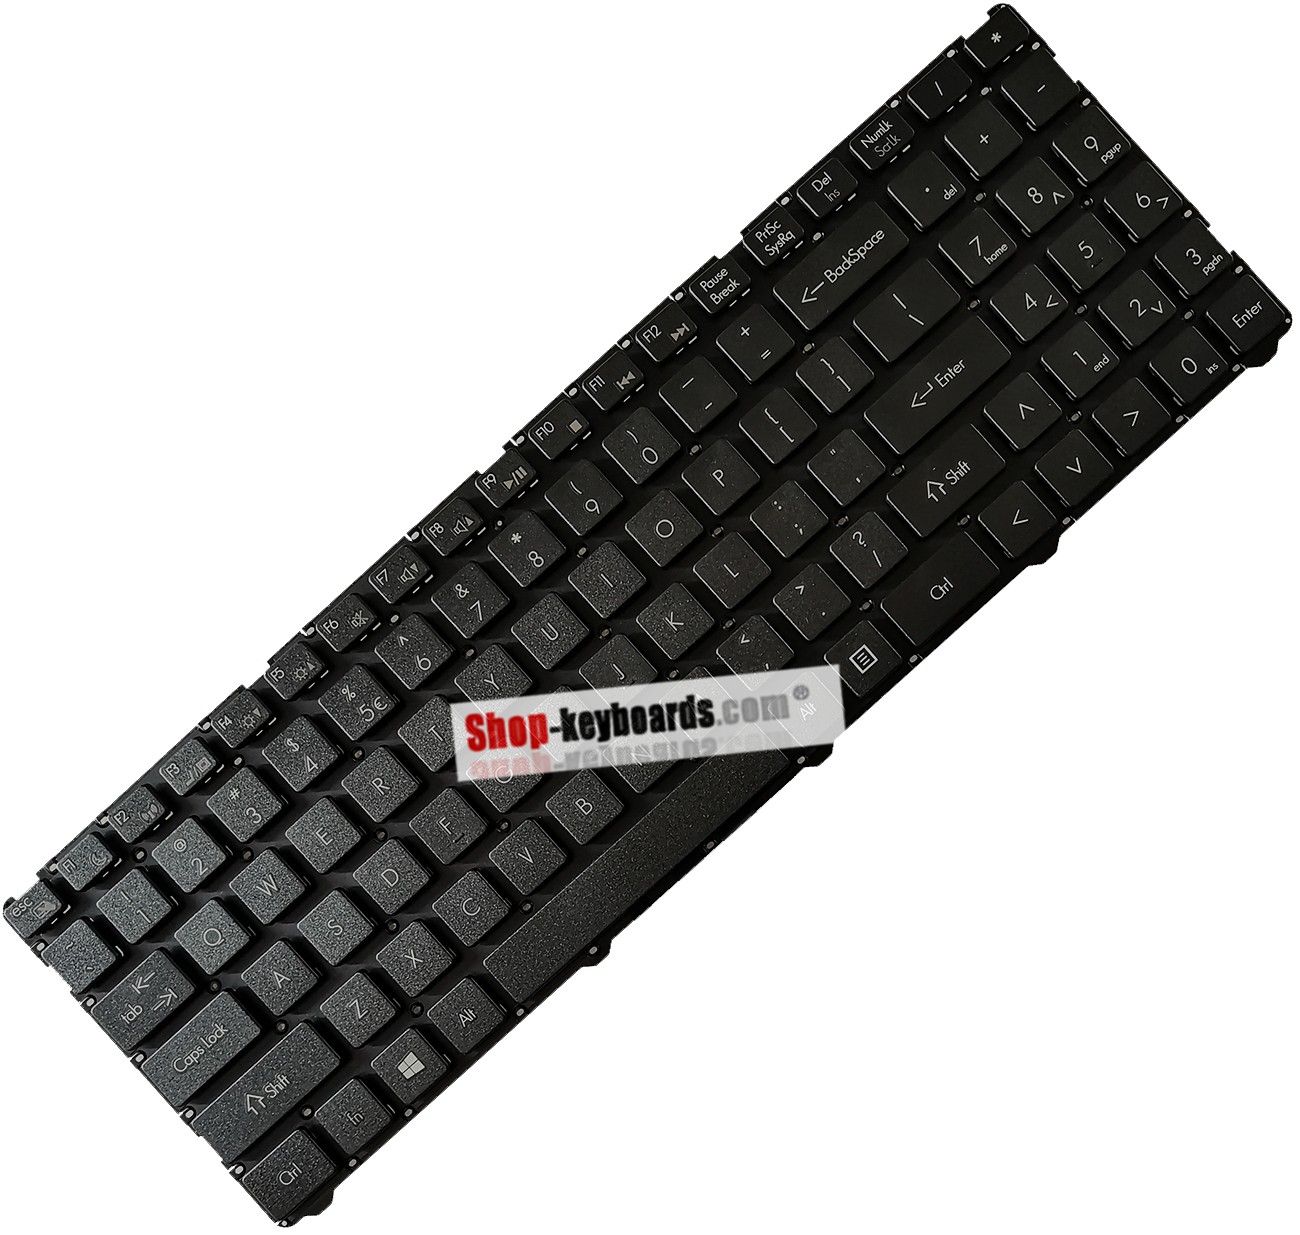 LG MP-12K73US-9208 Keyboard replacement